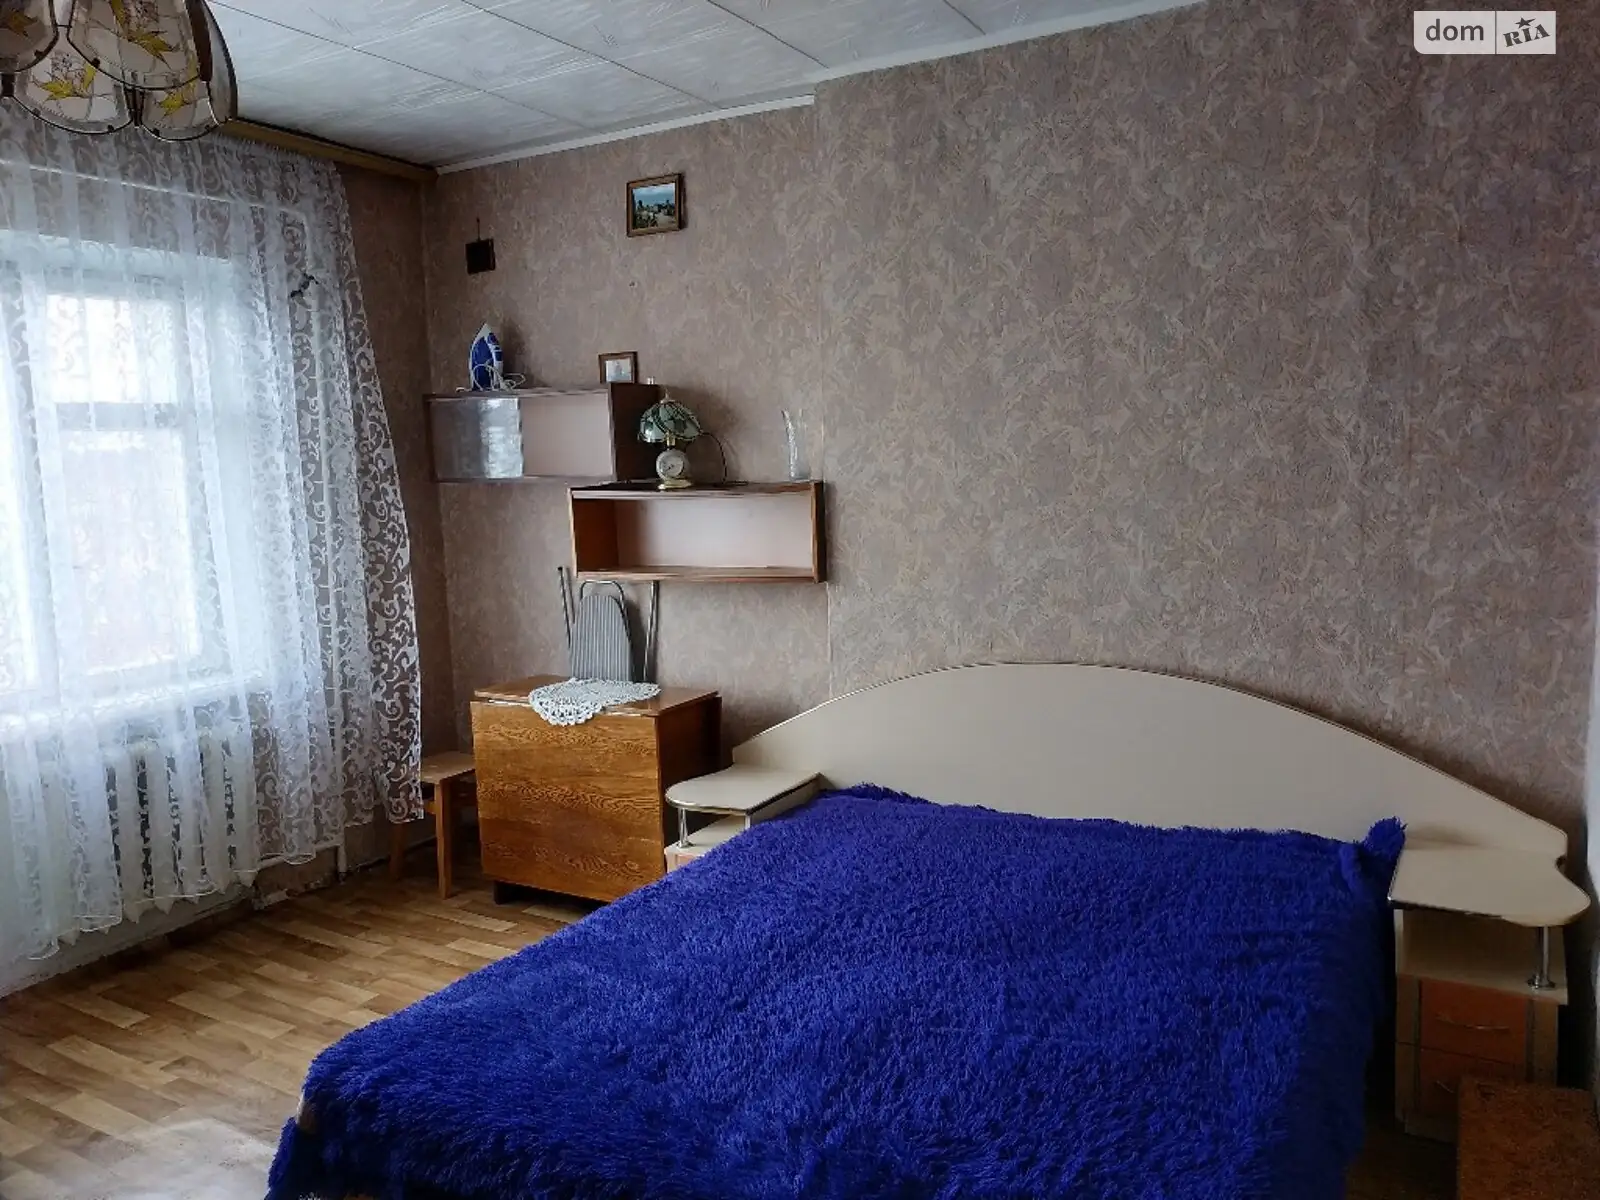 Сдается в аренду комната 16 кв. м в Виннице, цена: 4200 грн - фото 1